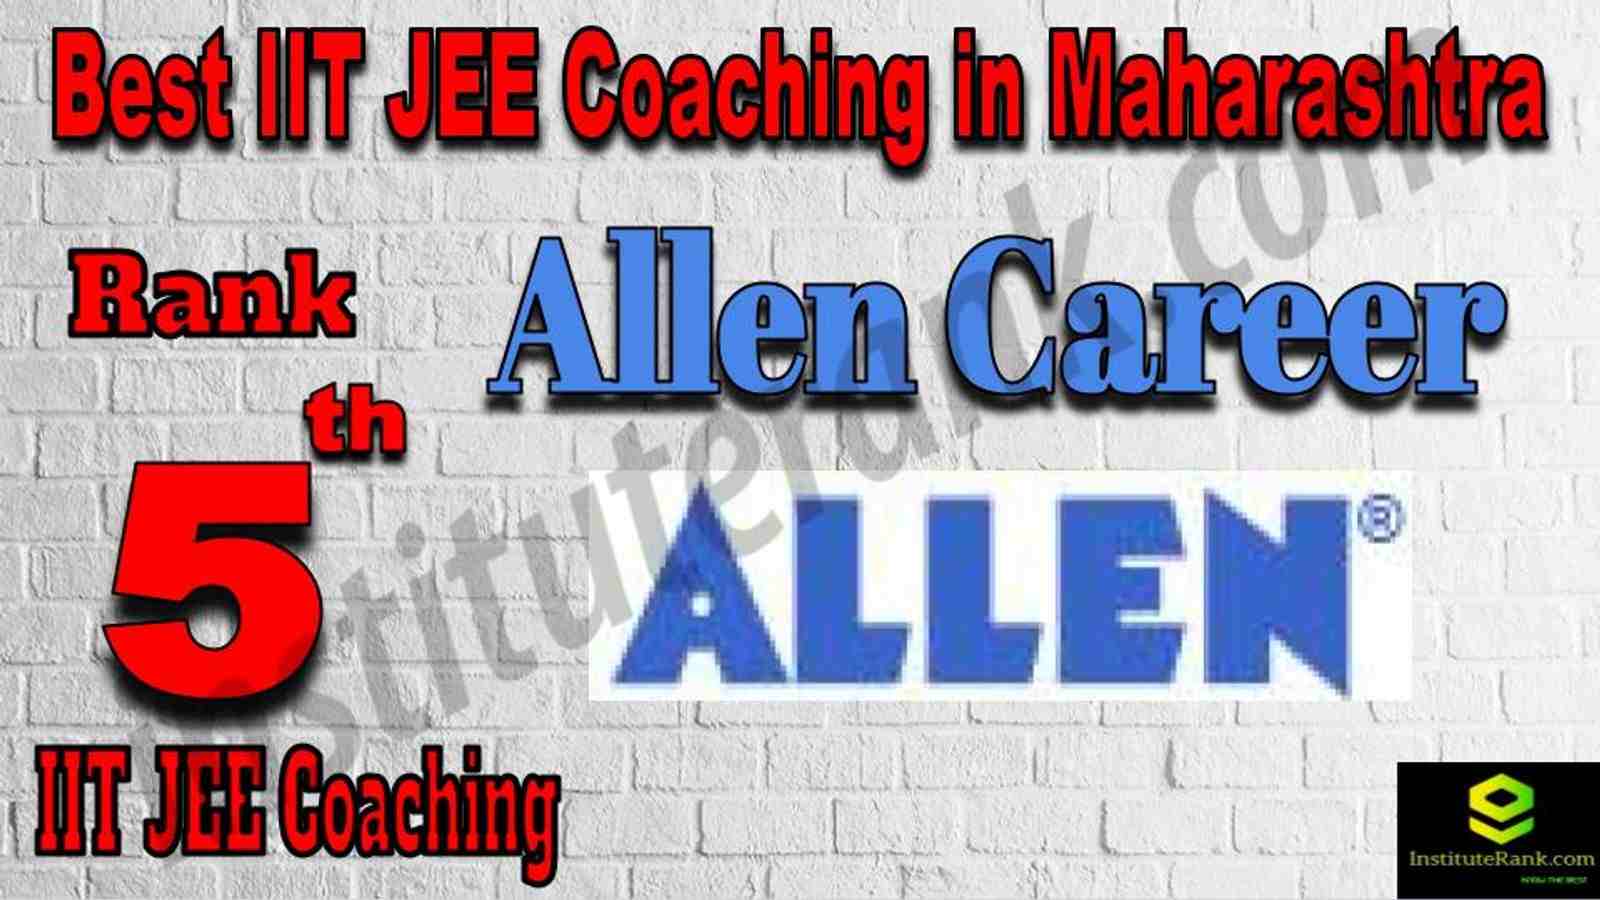 5th Best IIT JEE Coaching in Maharashtra